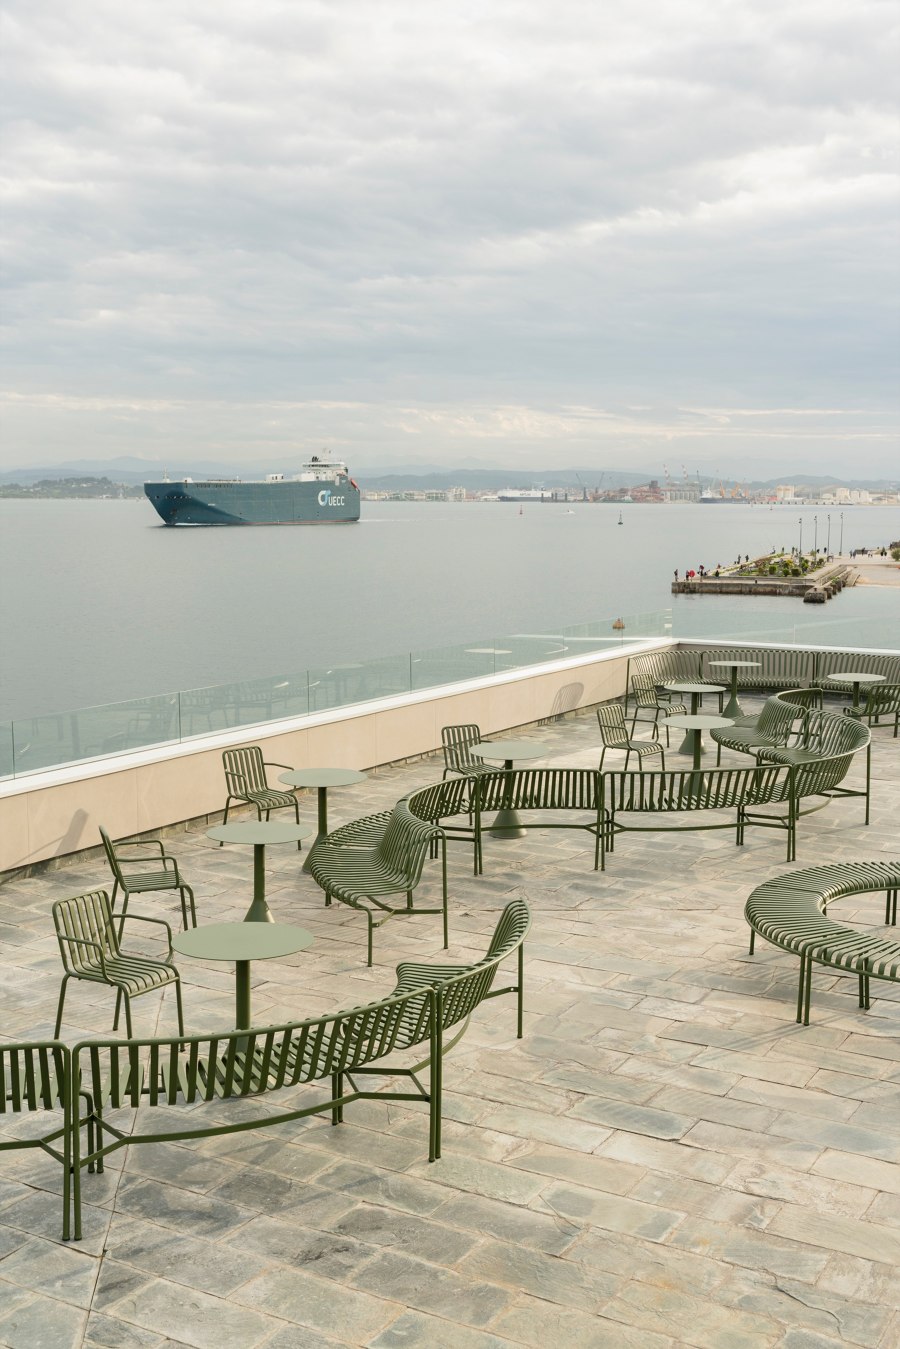 The Cantabrian Maritime Museum Restaurant | Diseño de restaurantes | Zooco Estudio